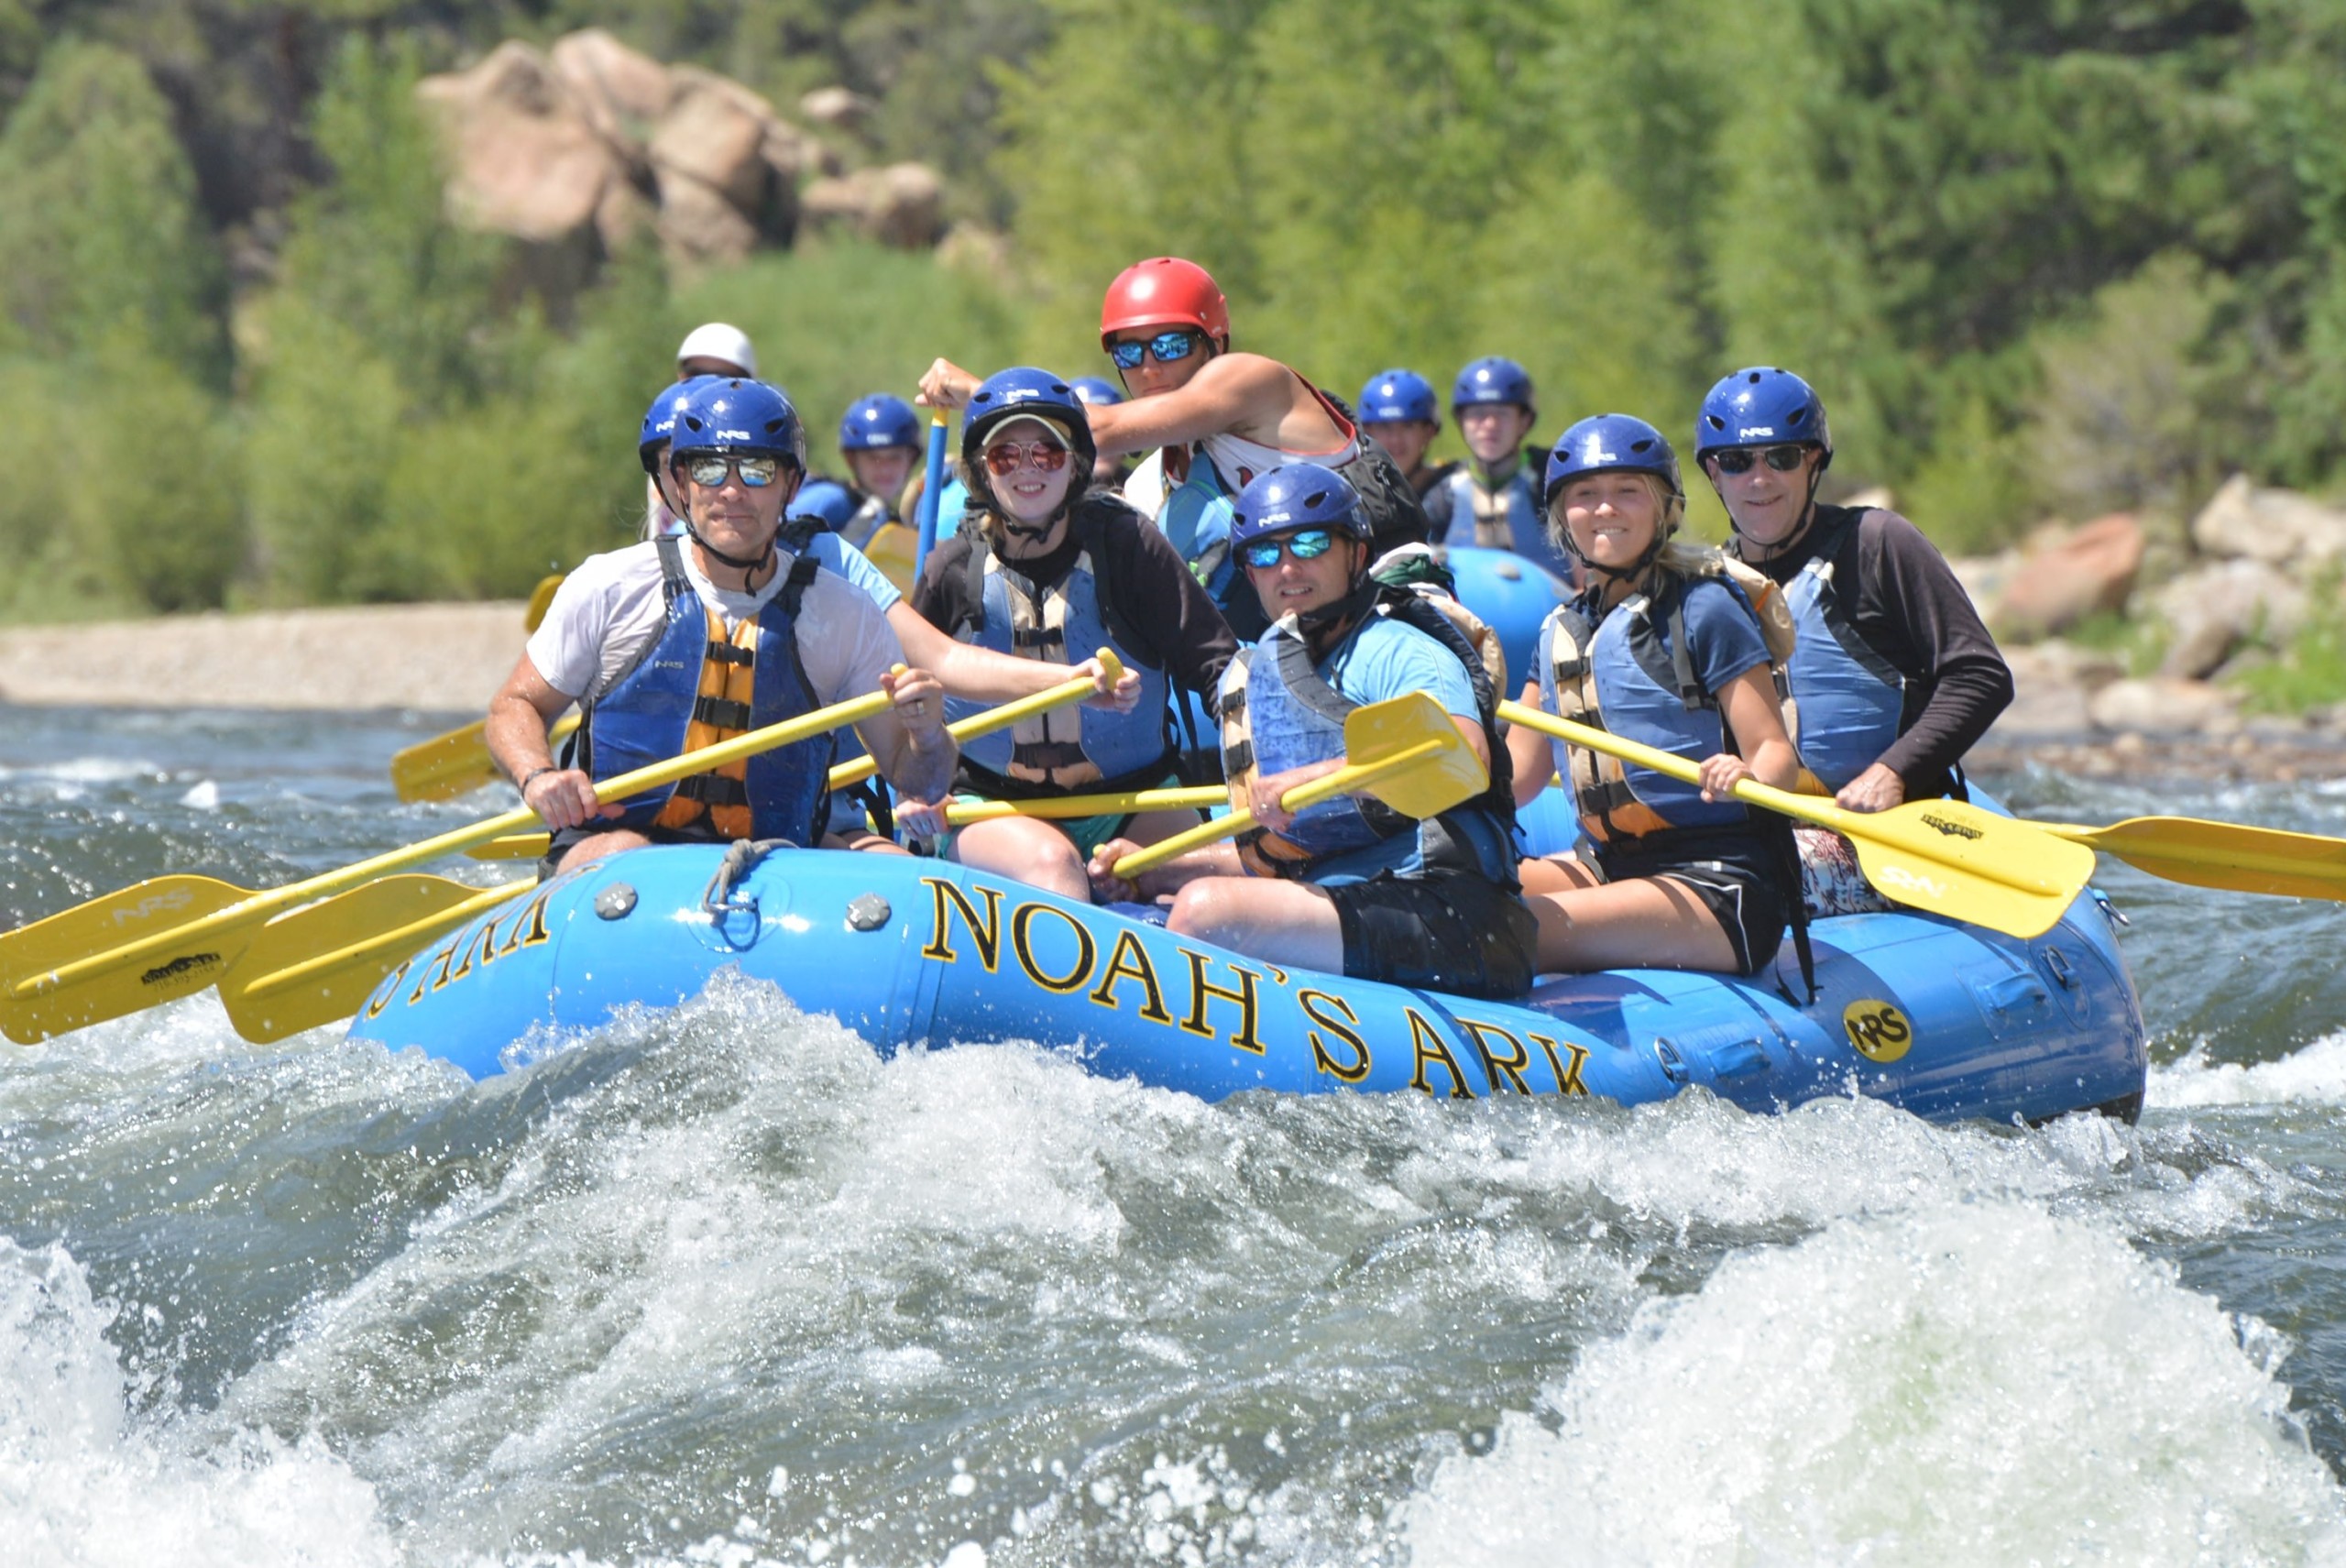 Father Teen Adventure members raft on the Arkansas river.